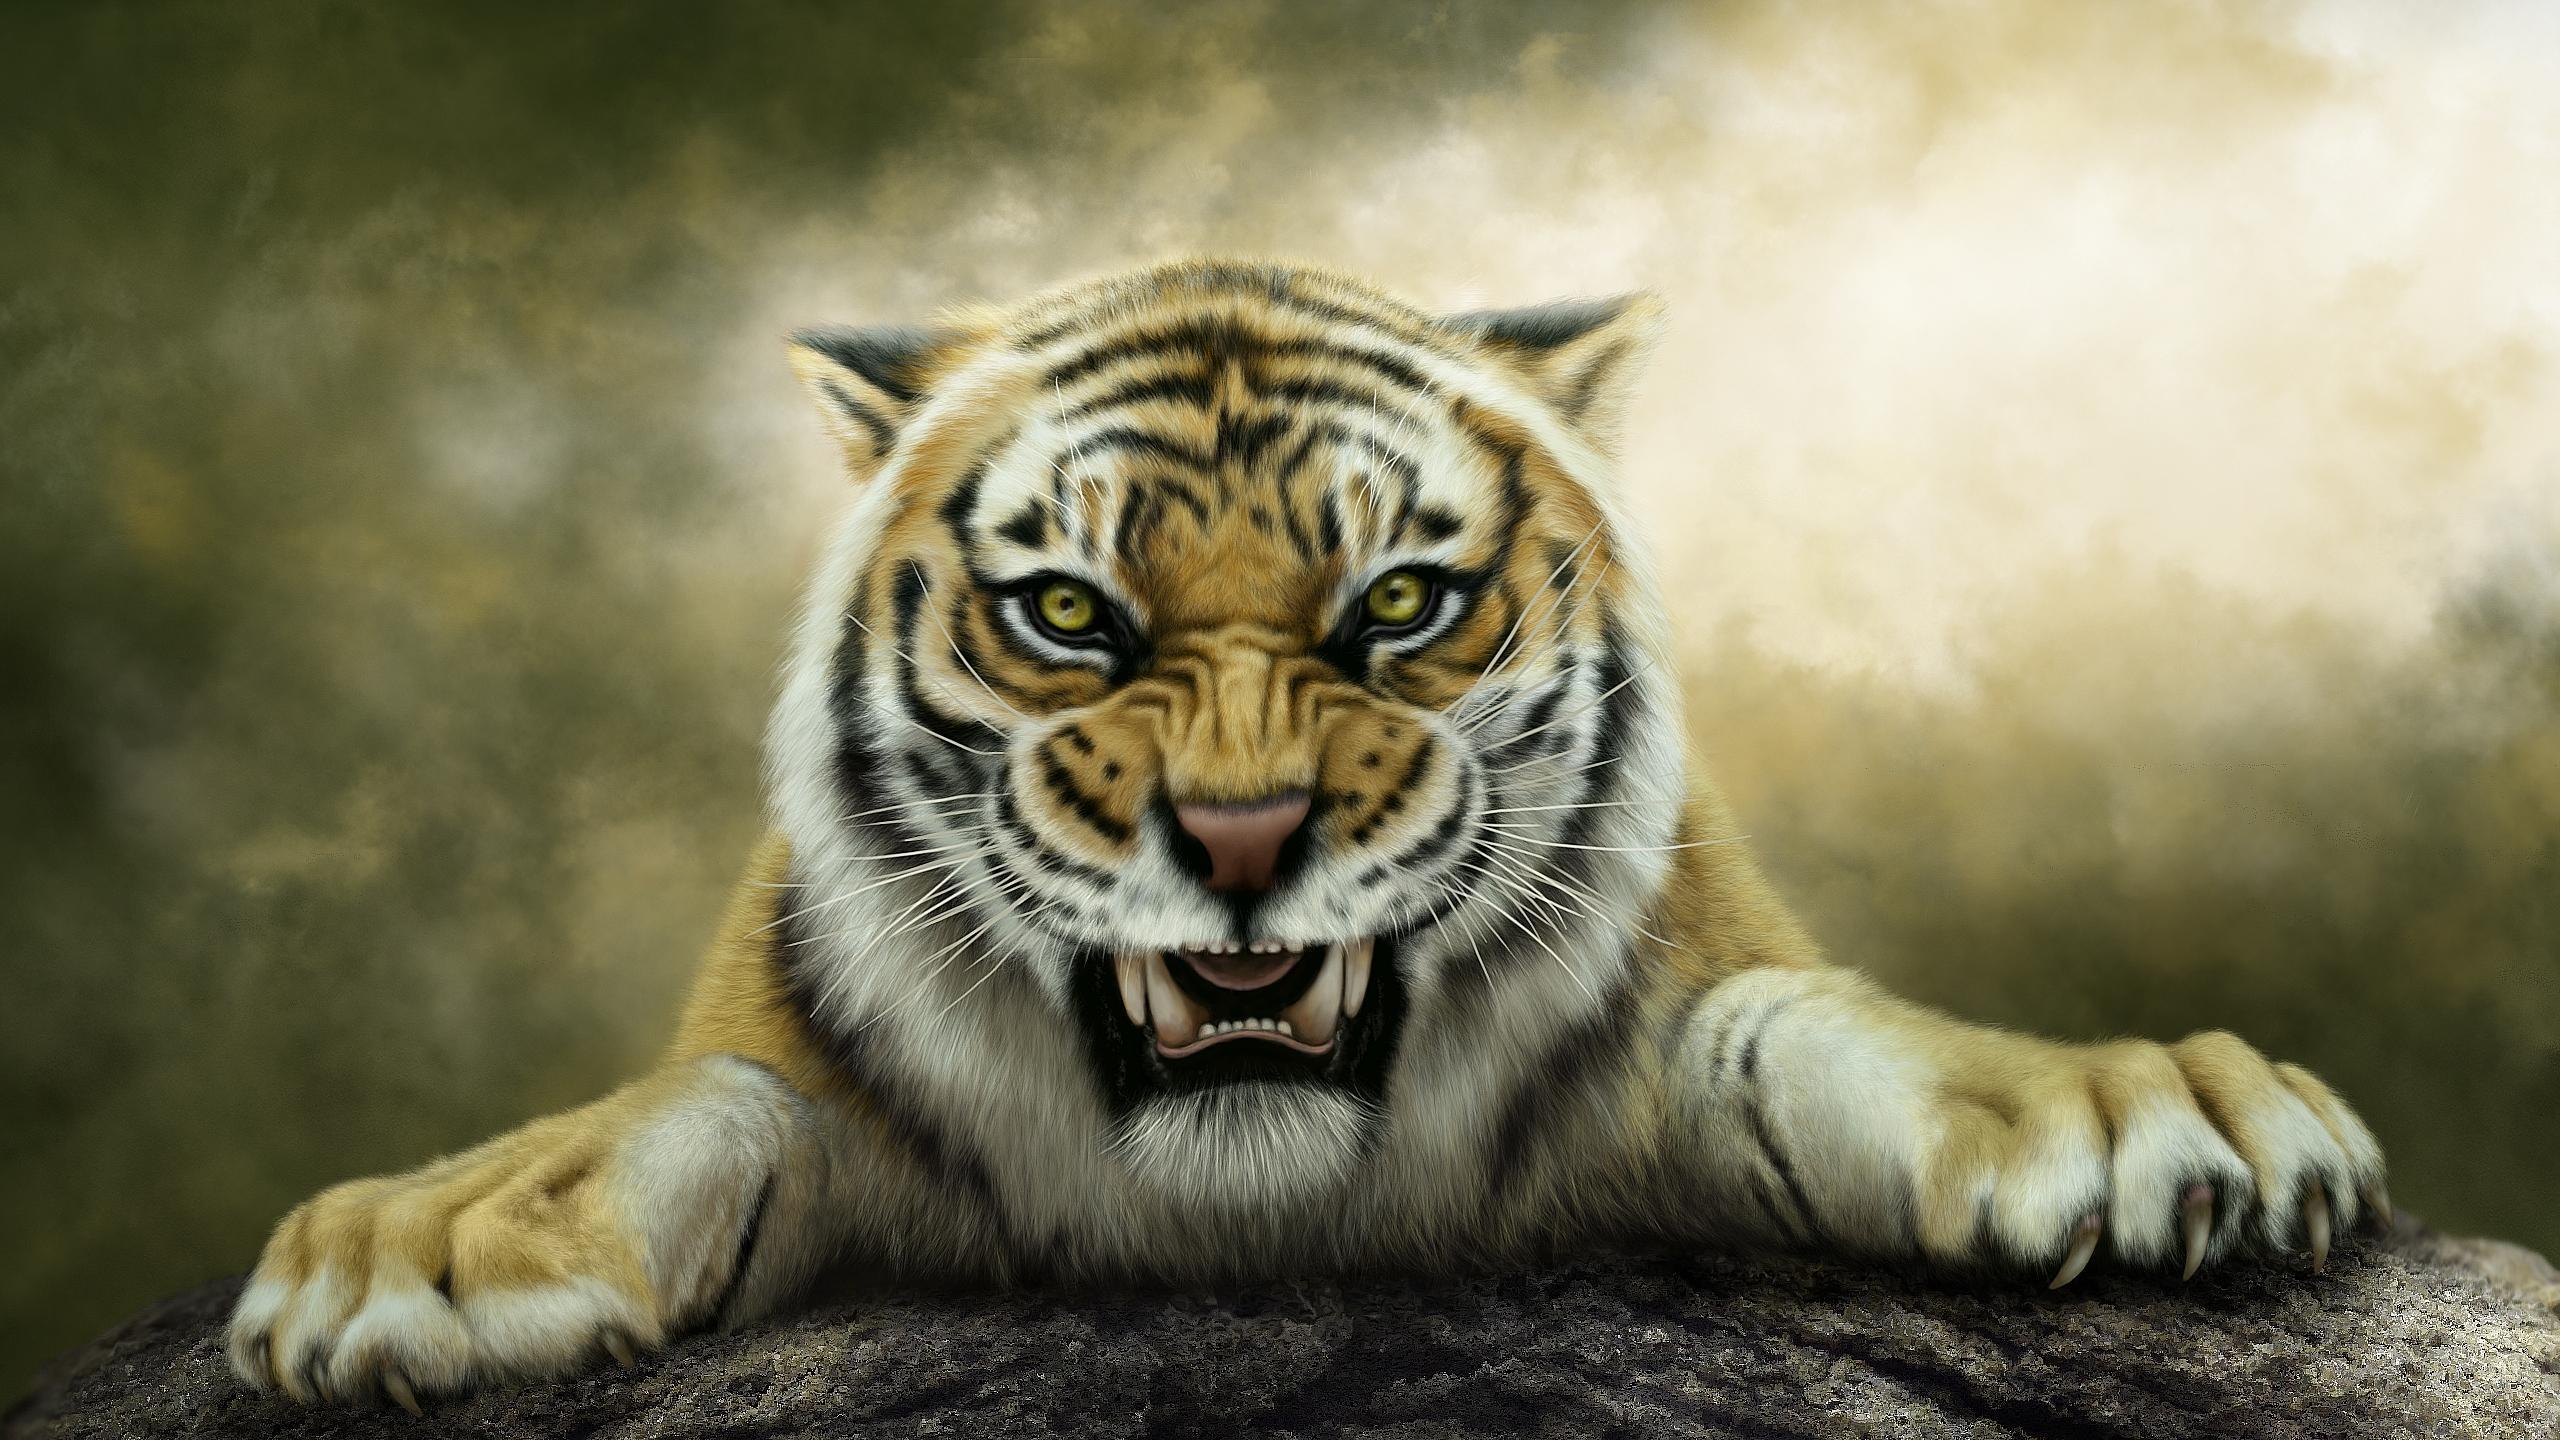 Angry Tiger Face Hd Wallpaper